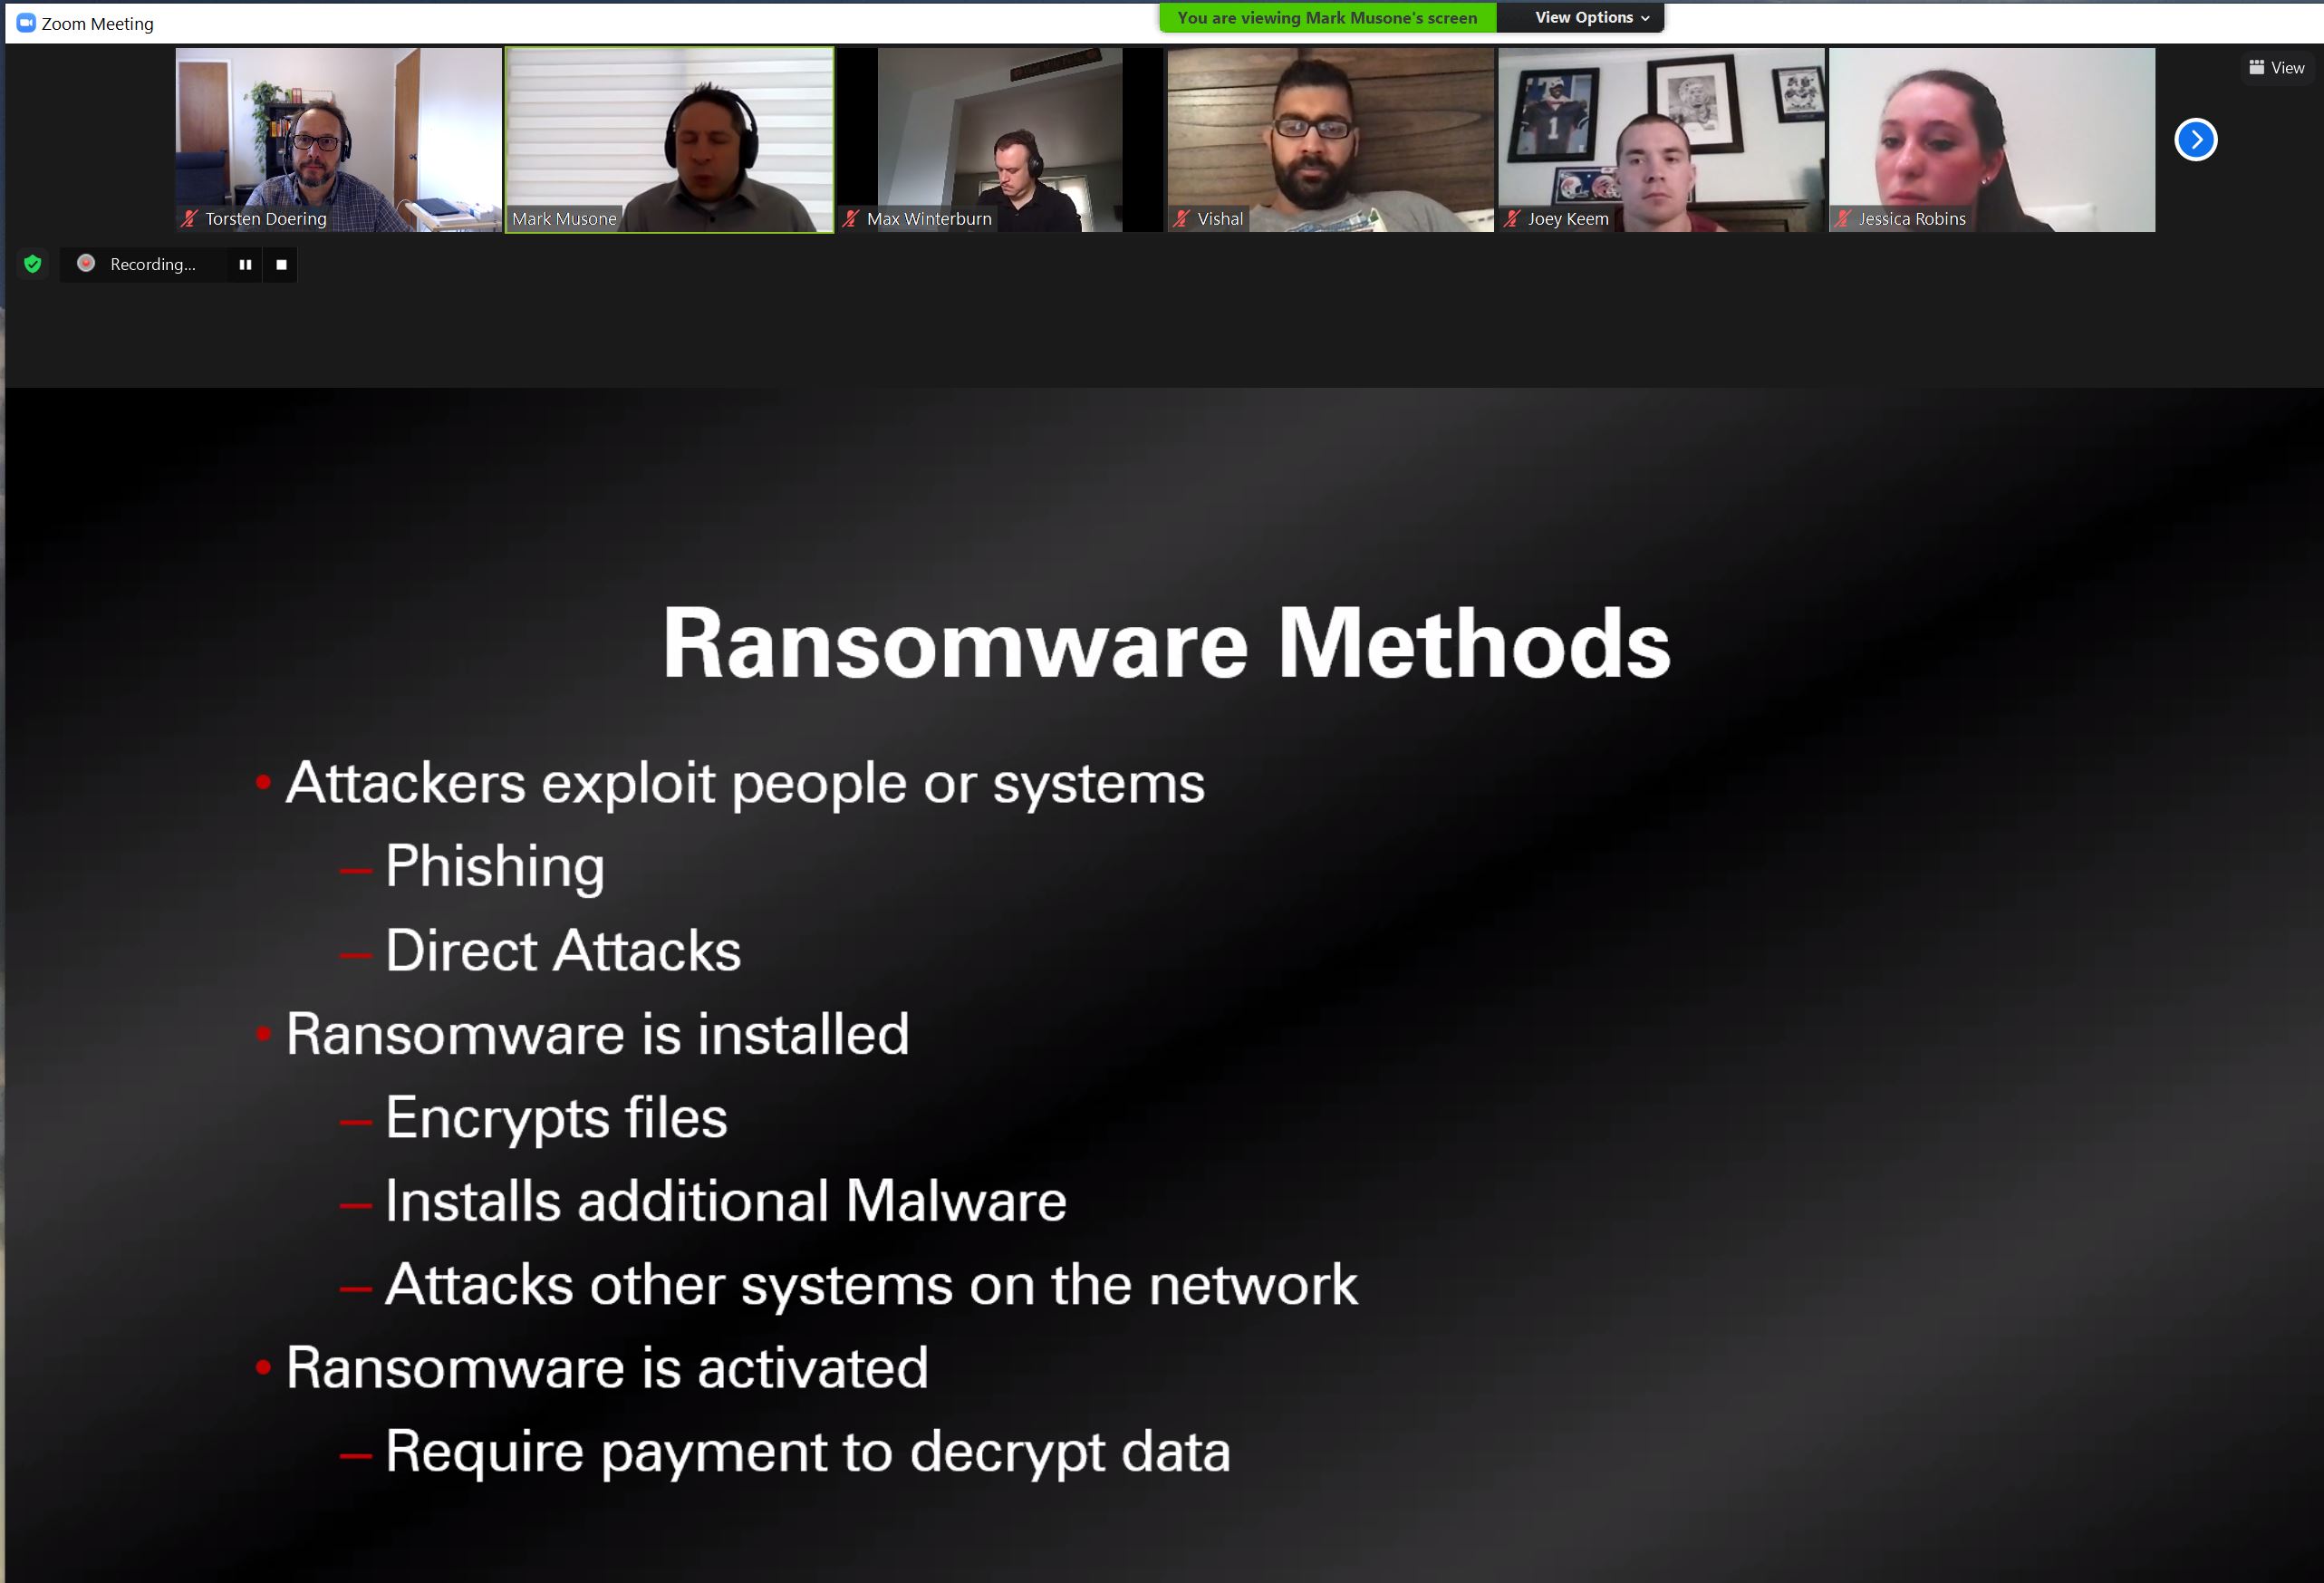 Ransomeware methods